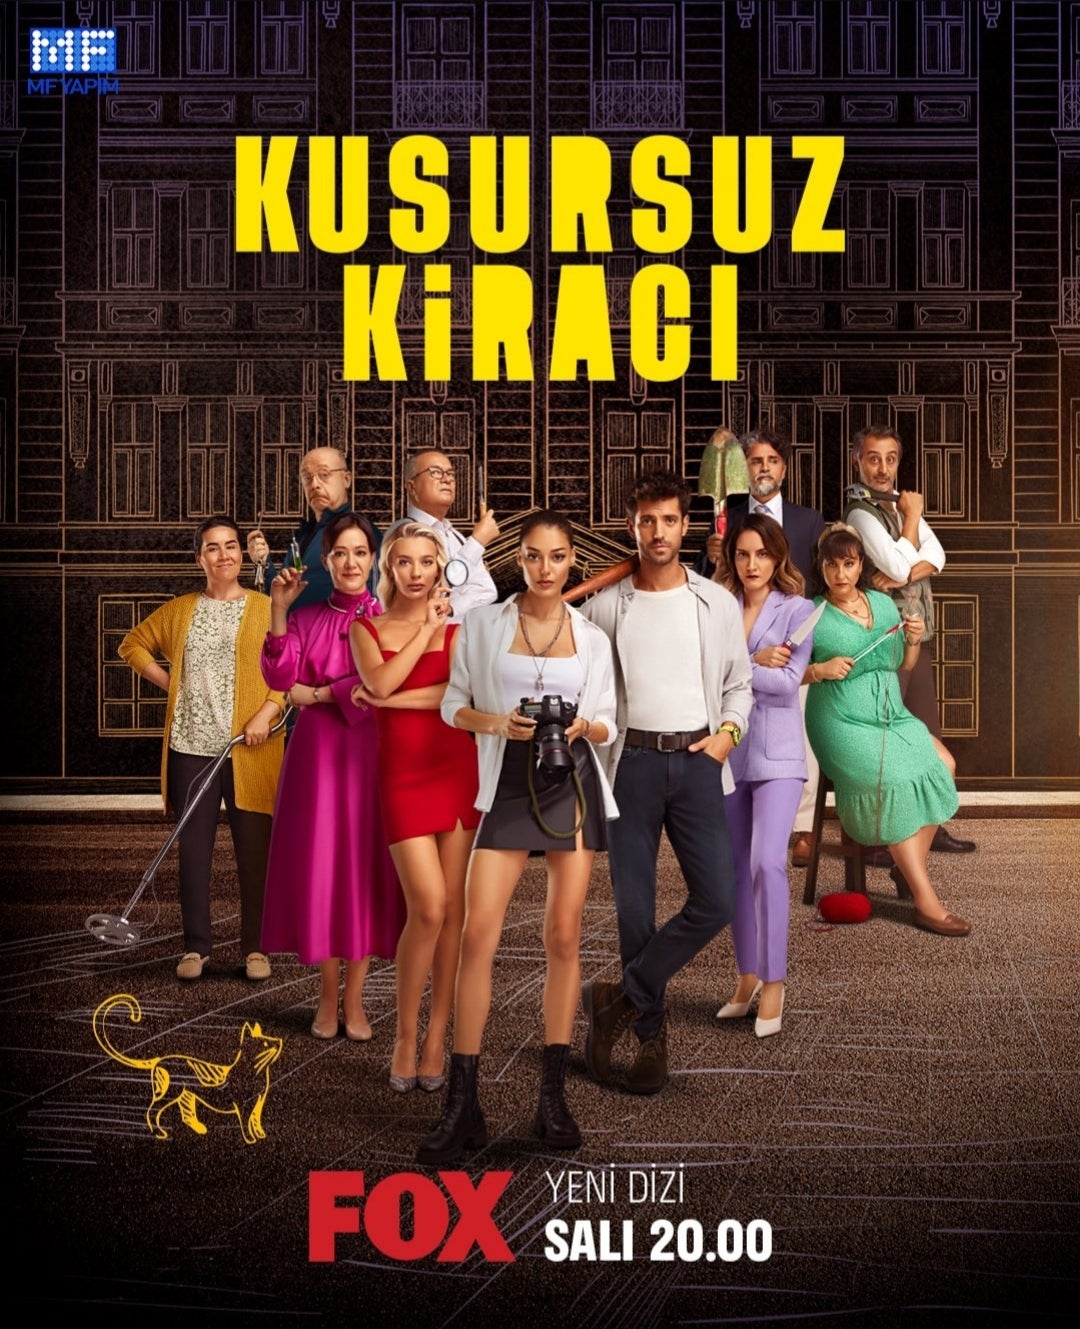 TV ratings for Kusursuz Kiraci in Mexico. FOX Türkiye TV series